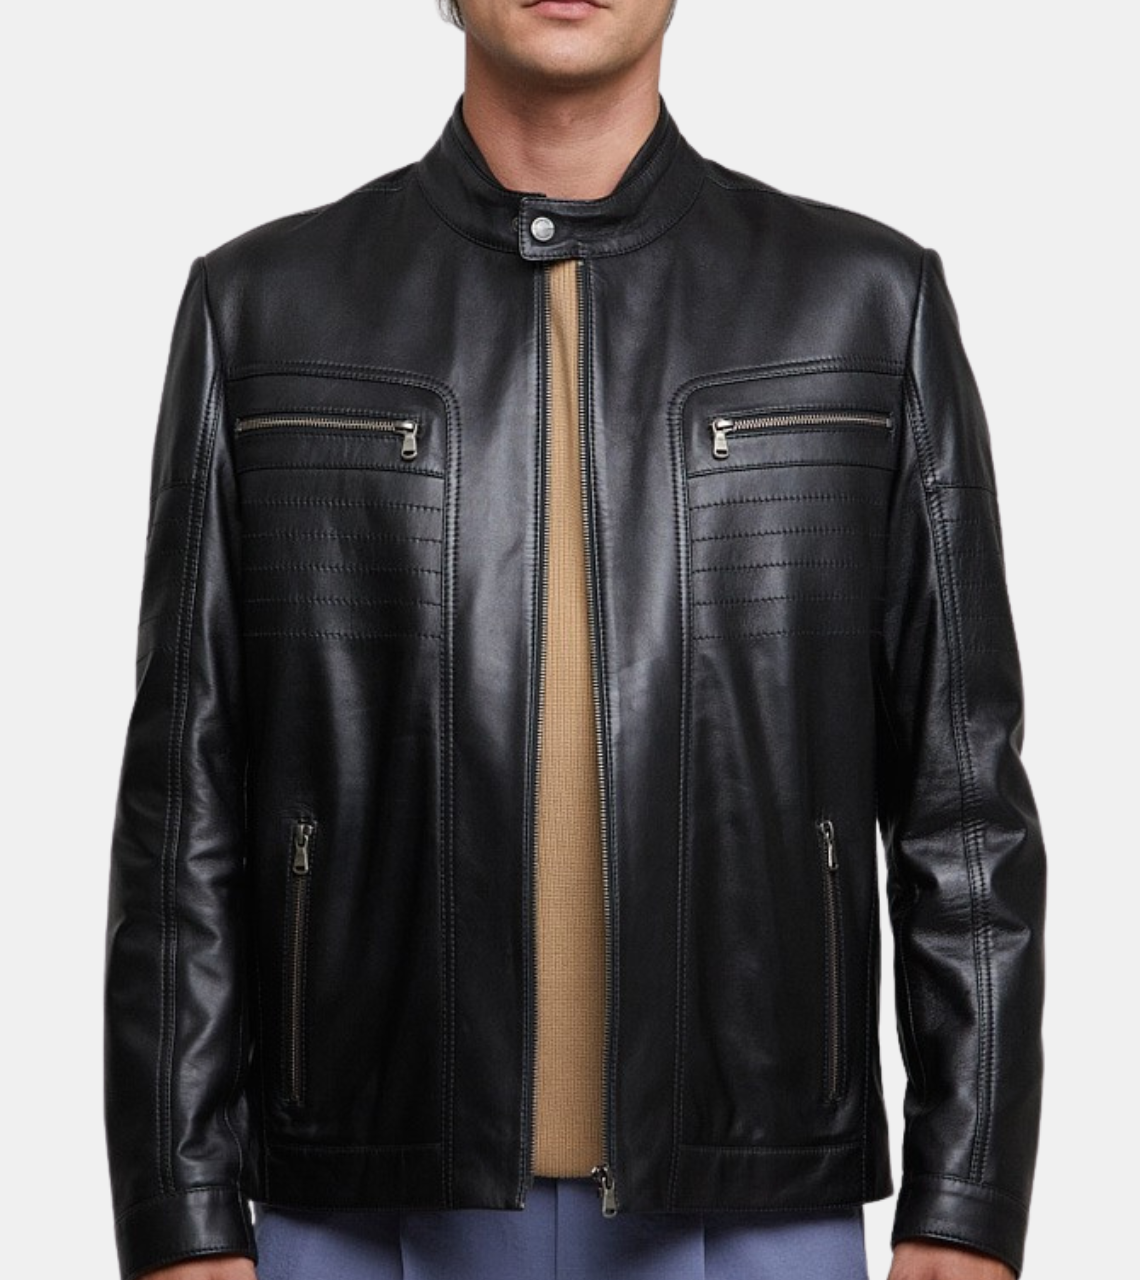 Blackwood Men's Black Leather Jacket